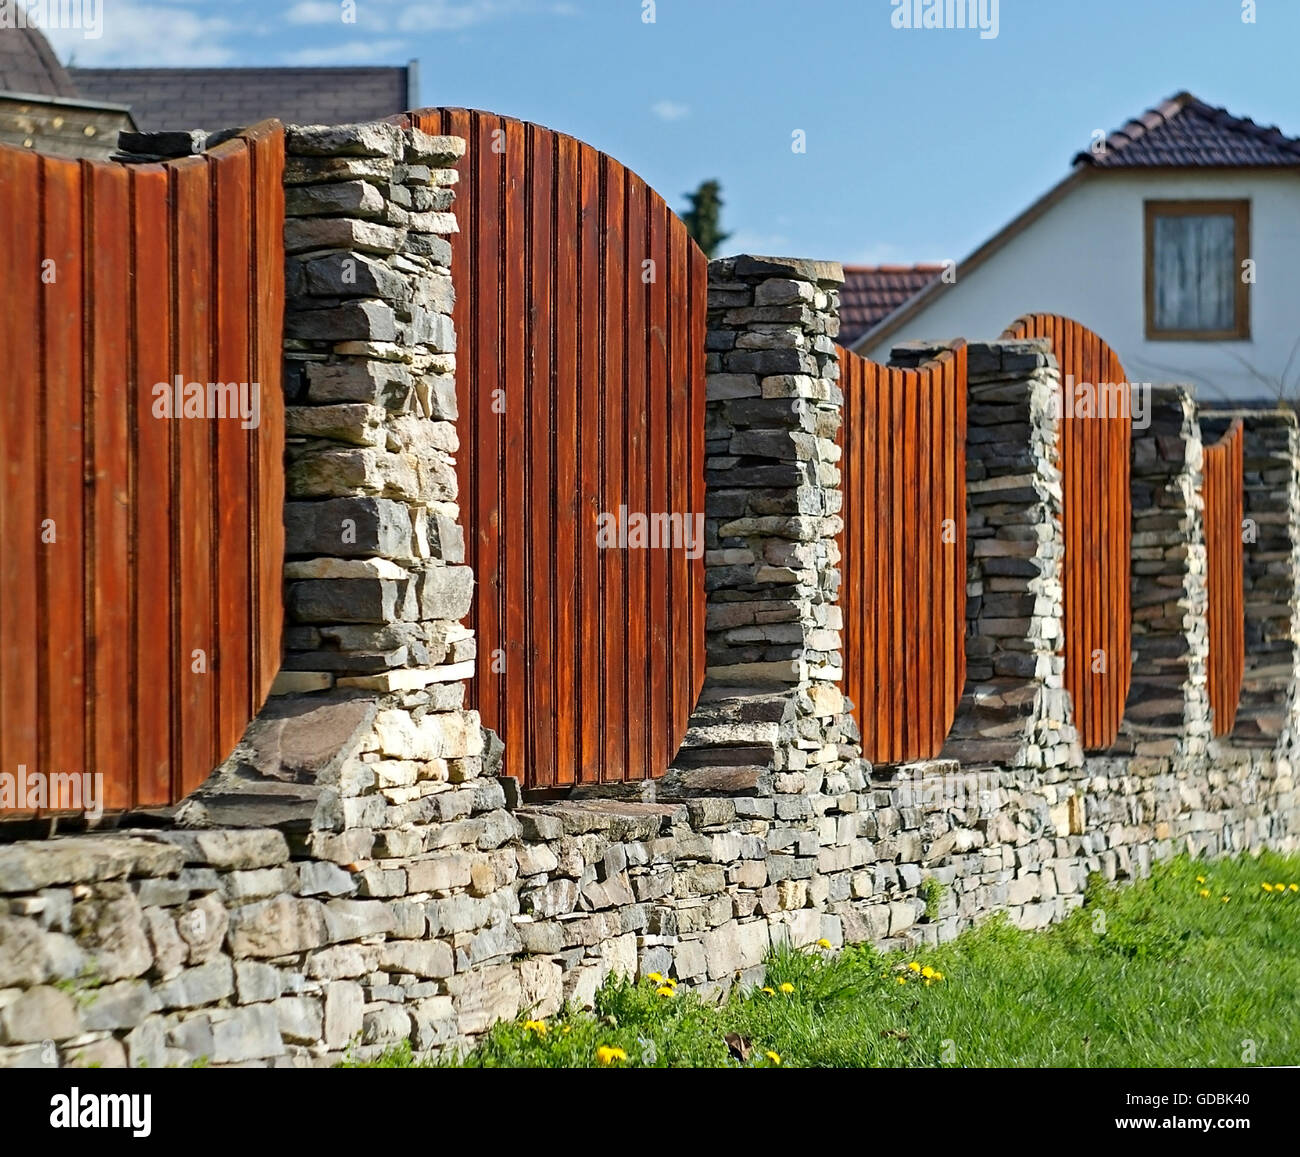 A beautiful lath fence with stone pillars. Stock Photo